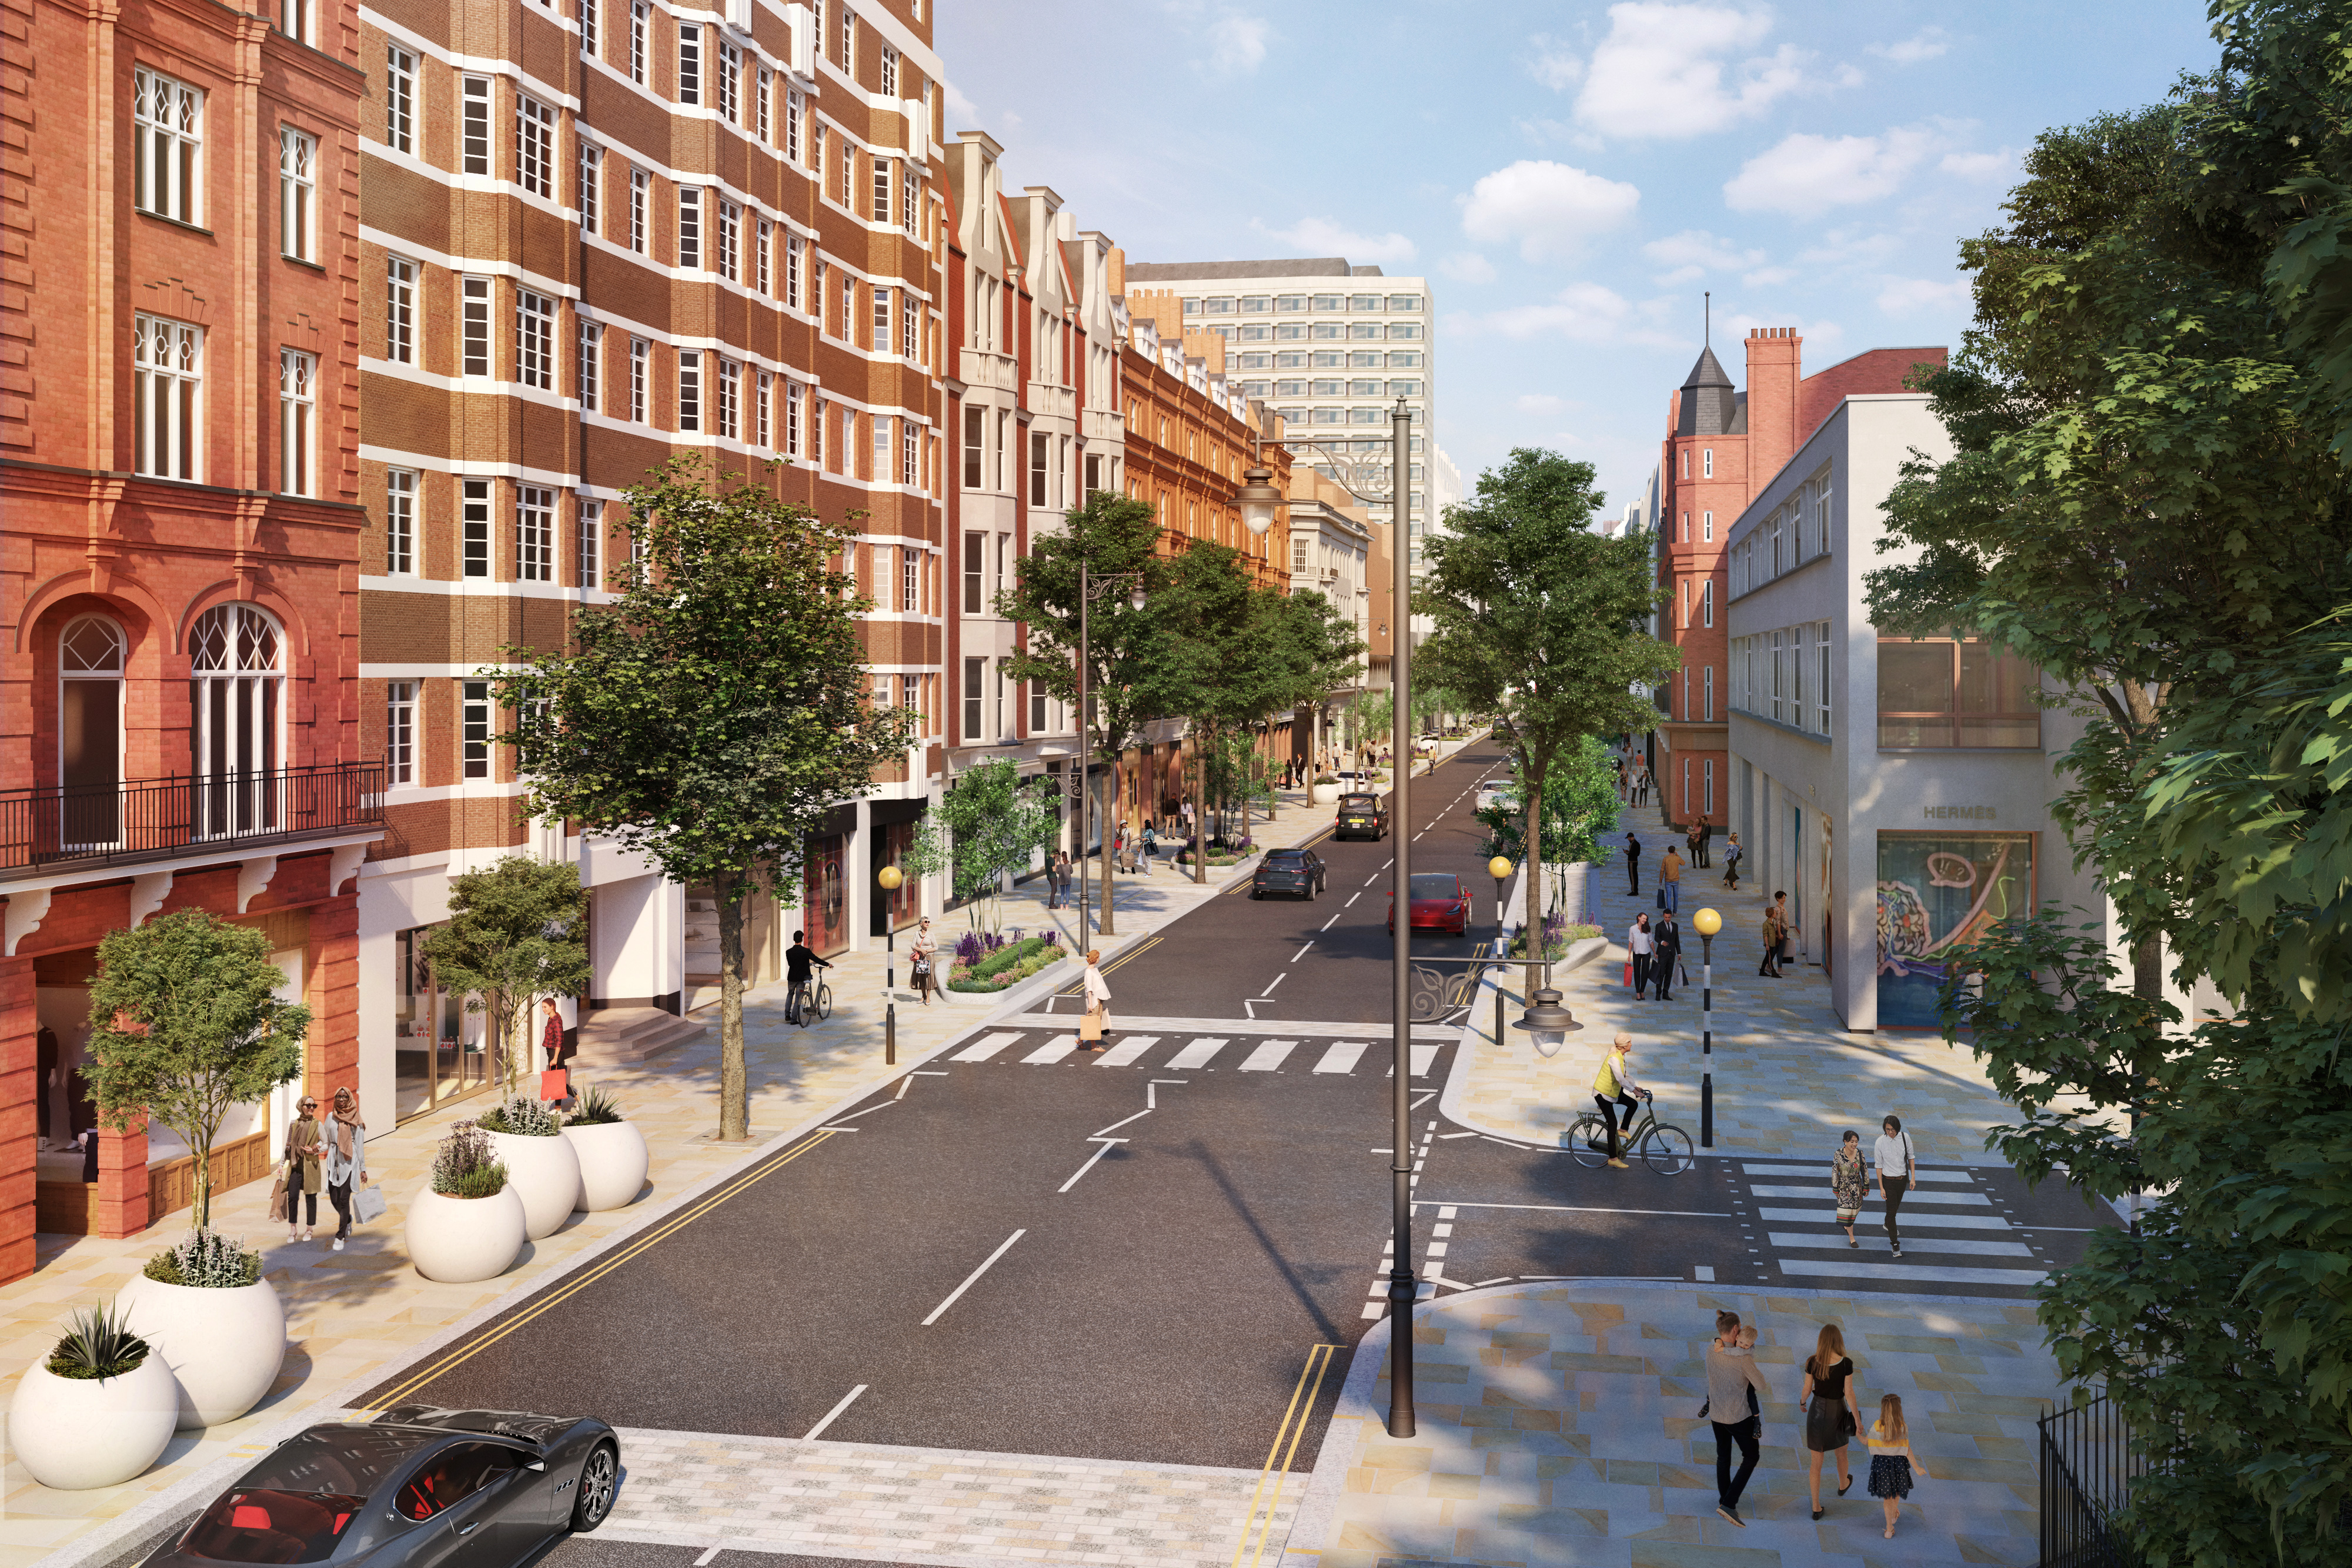 London's Sloane Street to become a striking green boulevard